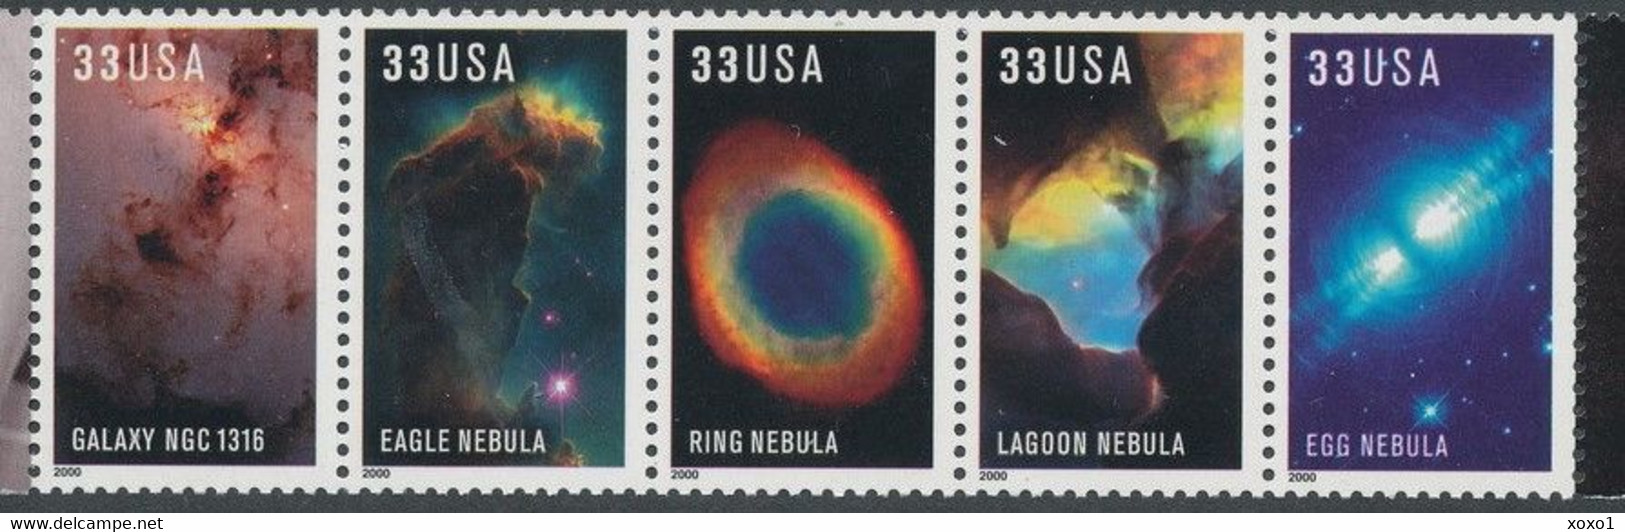 USA 2000 MiNr. 3280 - 3284 Hubble Space Telescope, Astronomy 5v MNH** 4,20 € - Astronomy